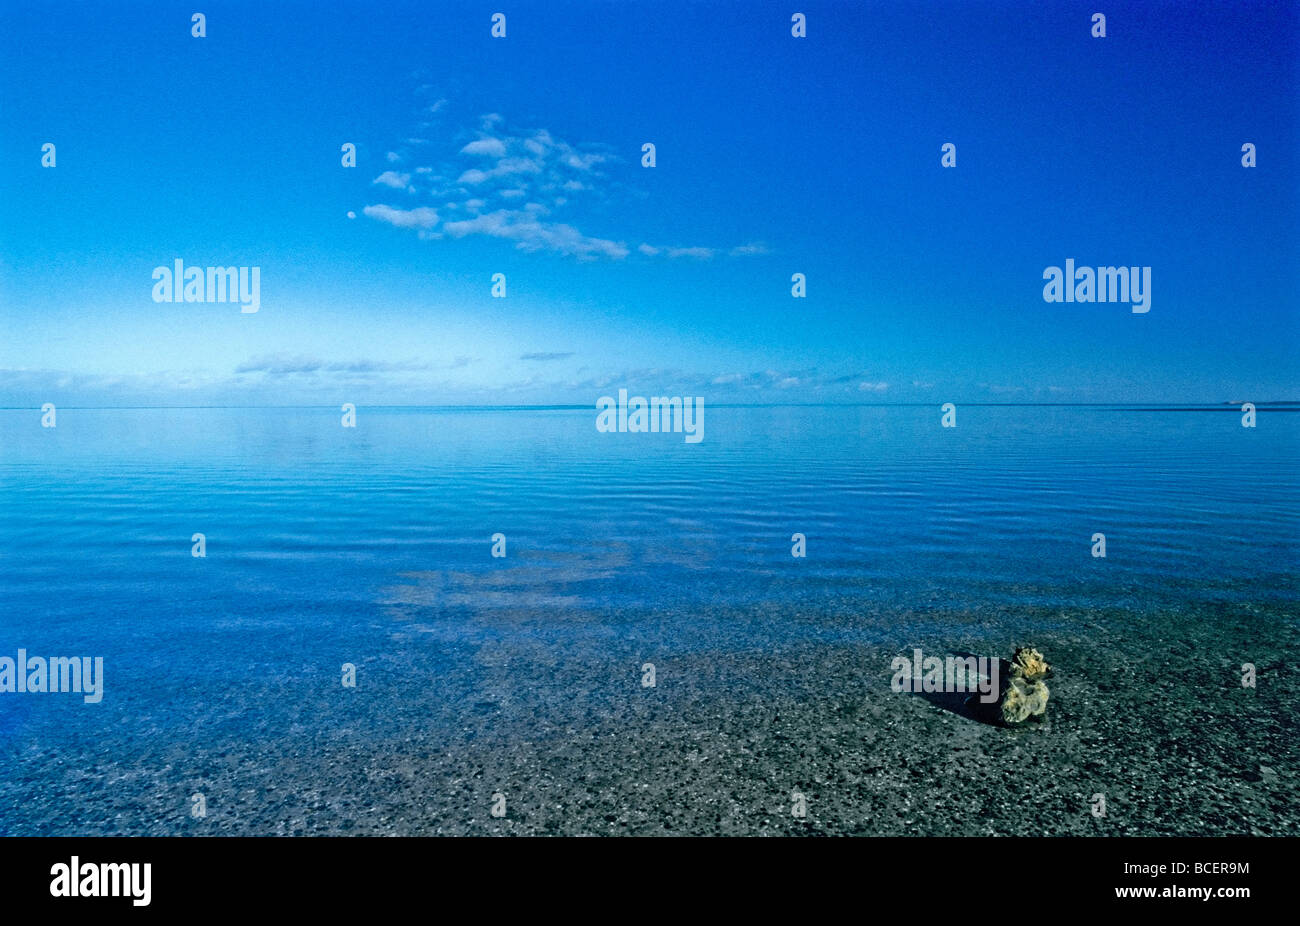 Clear blue skies settle over the mirror calm seas of L'Haridon Bight. Stock Photo